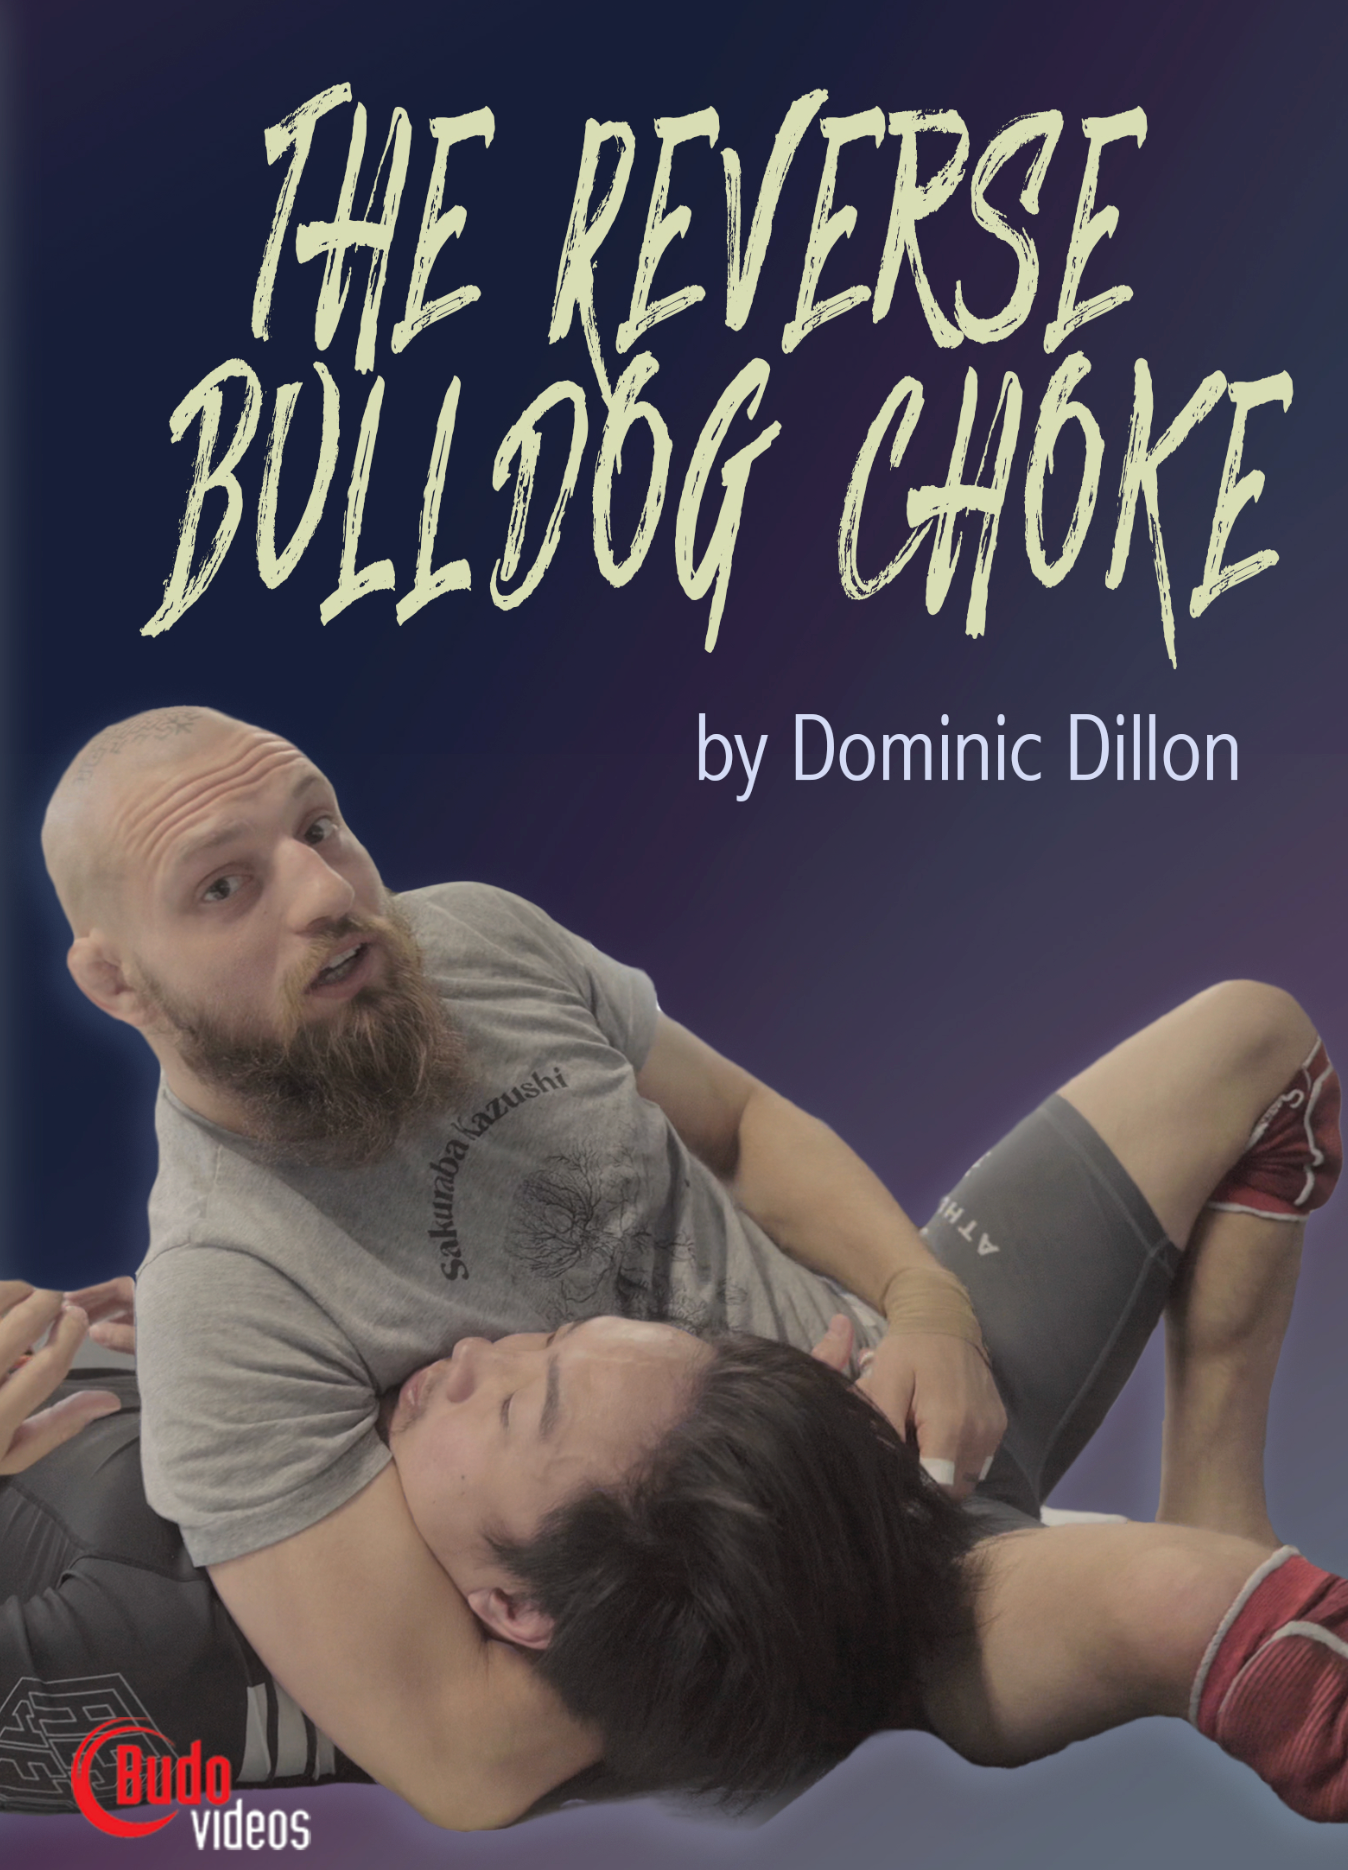 DVD El estrangulamiento del bulldog inverso de Dominic Dillon